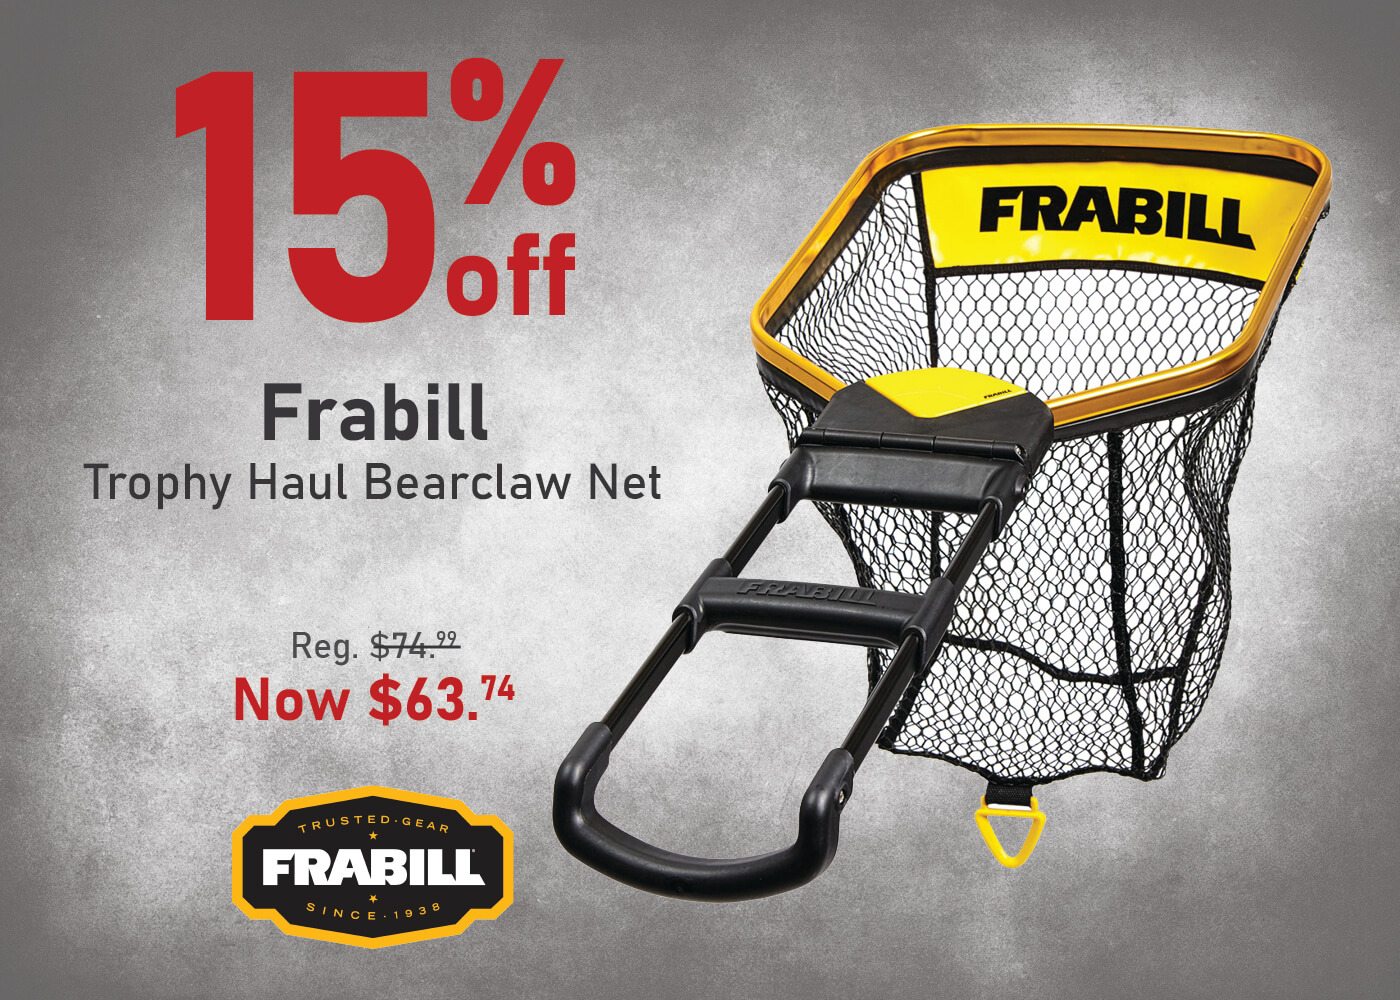 Take 15% off the Frabill Trophy Haul Bearclaw Net